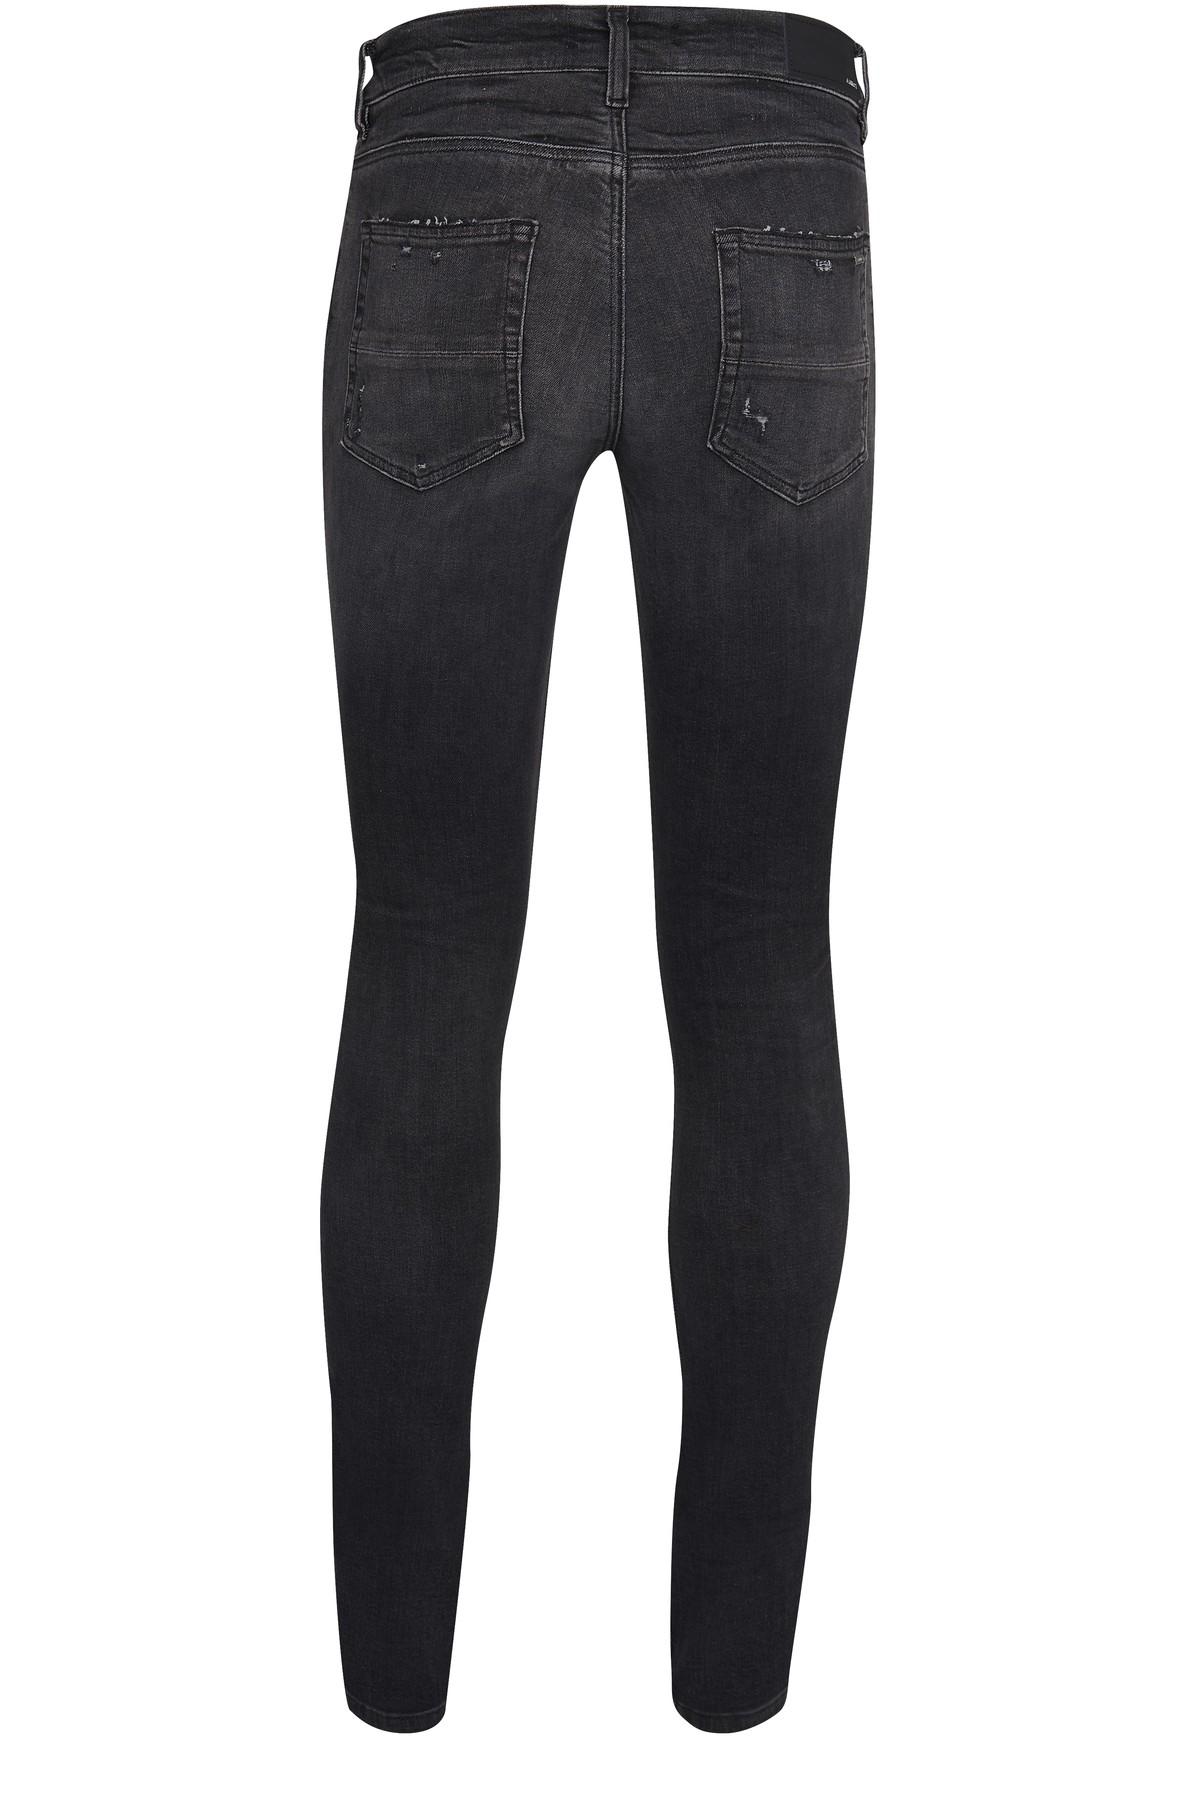 Amiri Denim Grey Stack Jeans in Gray for Men - Lyst